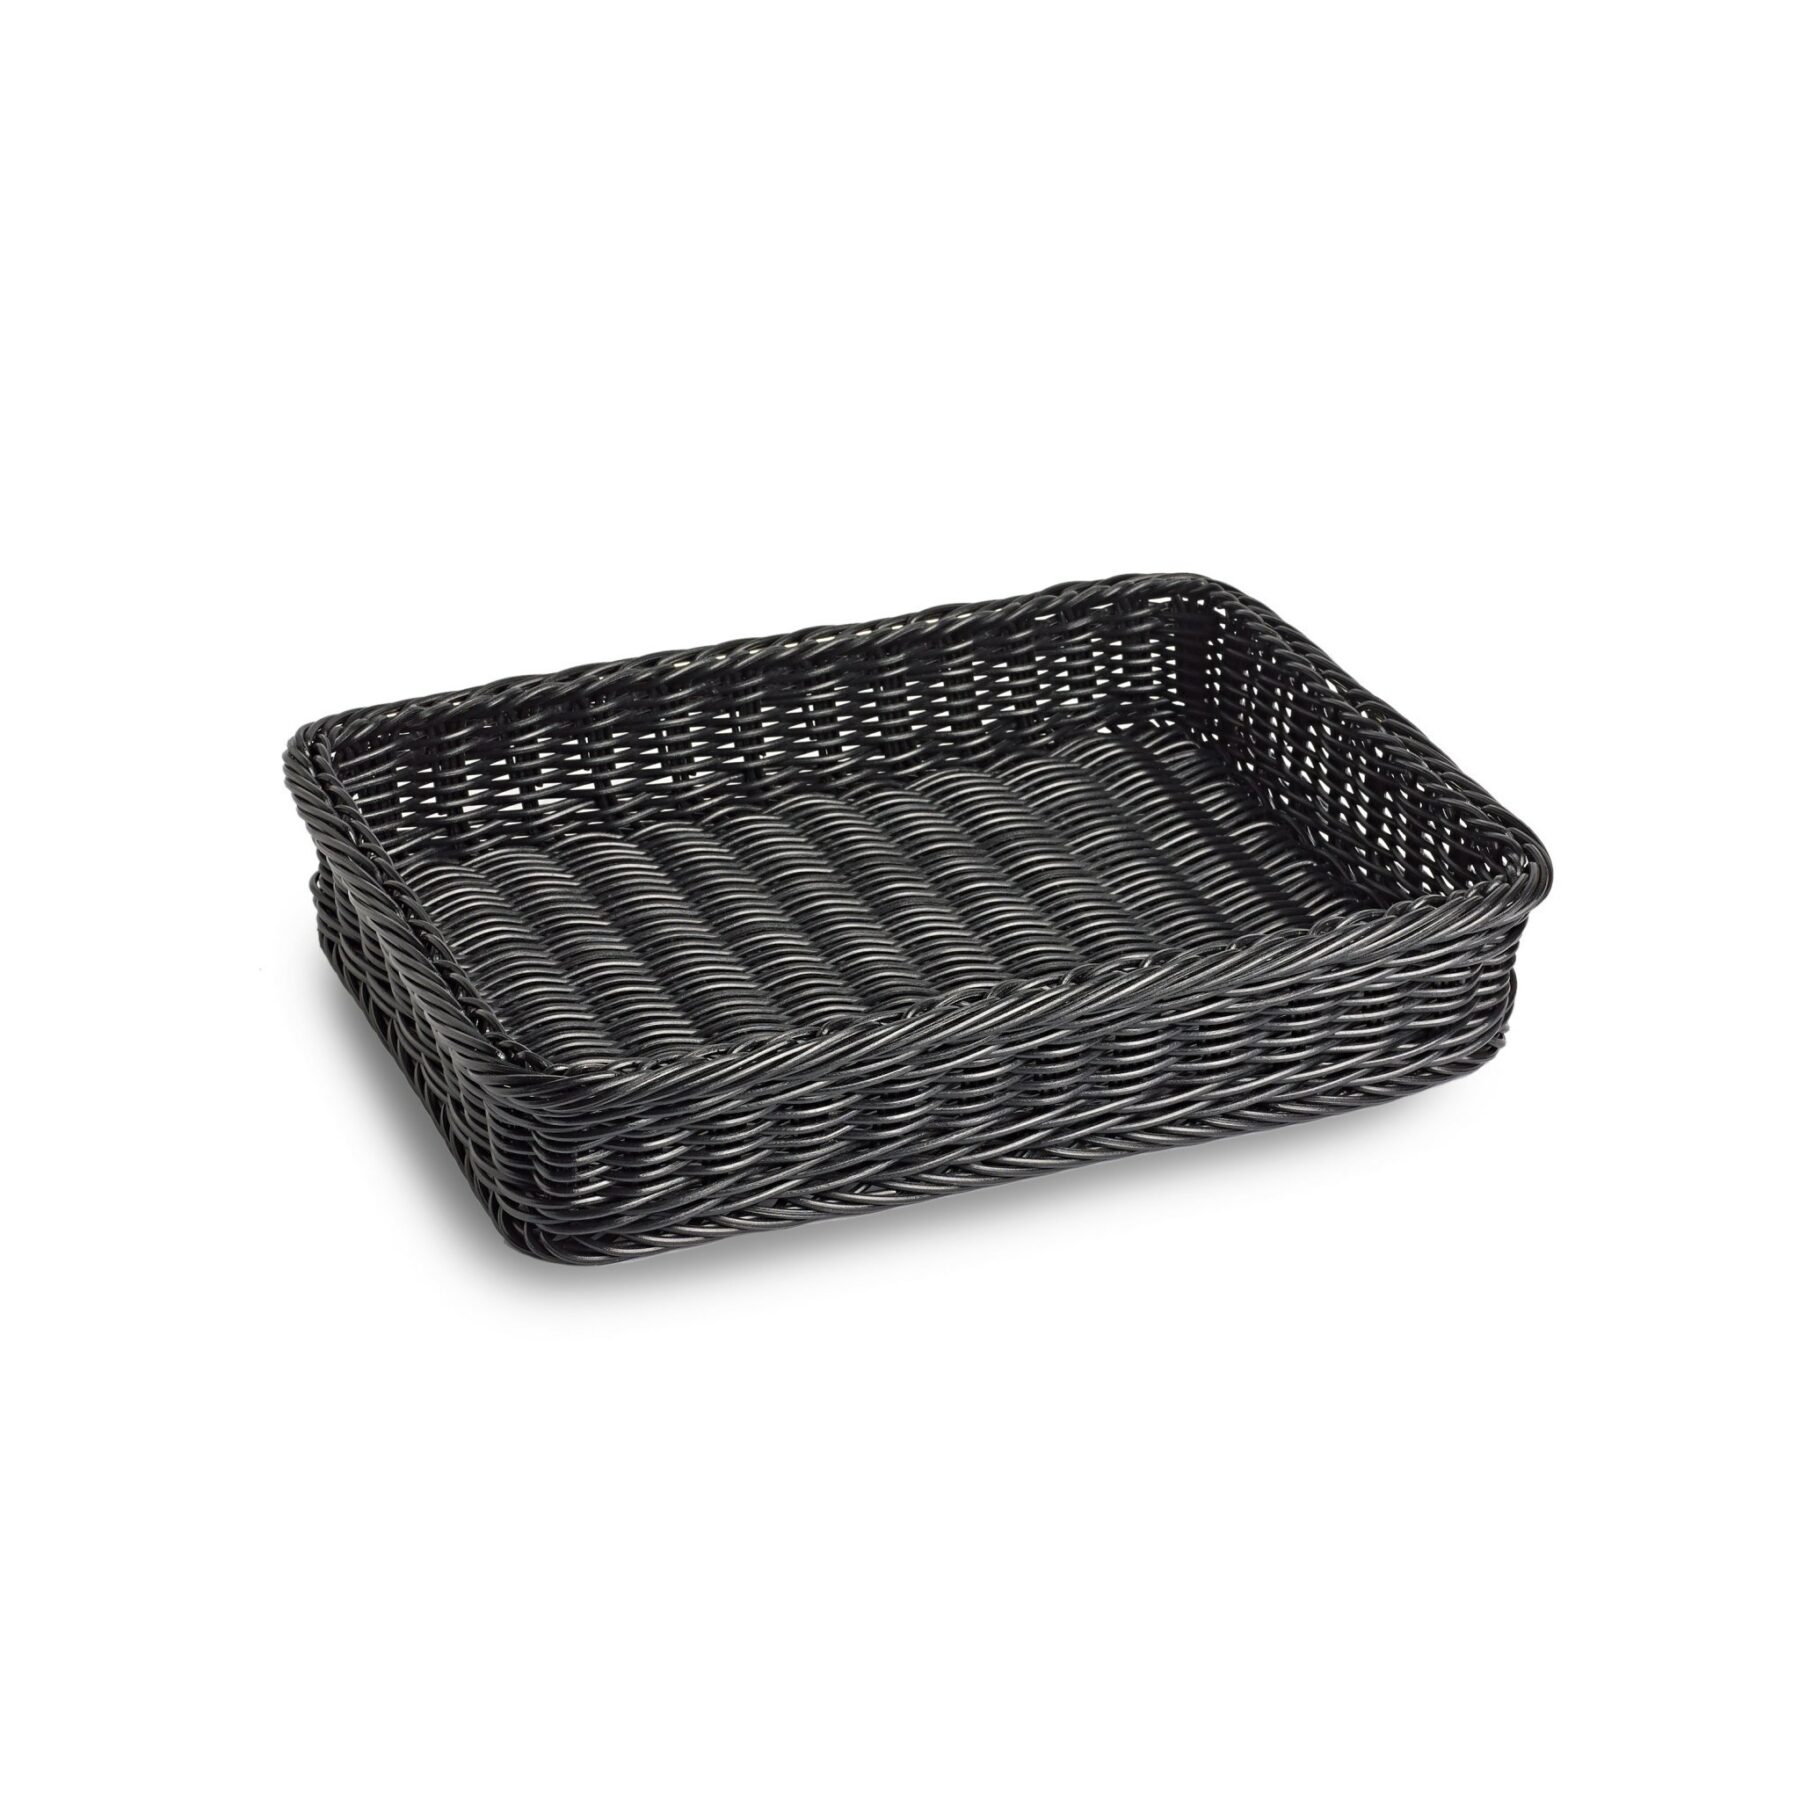 Black Plastic Wicker Basket - 40cm